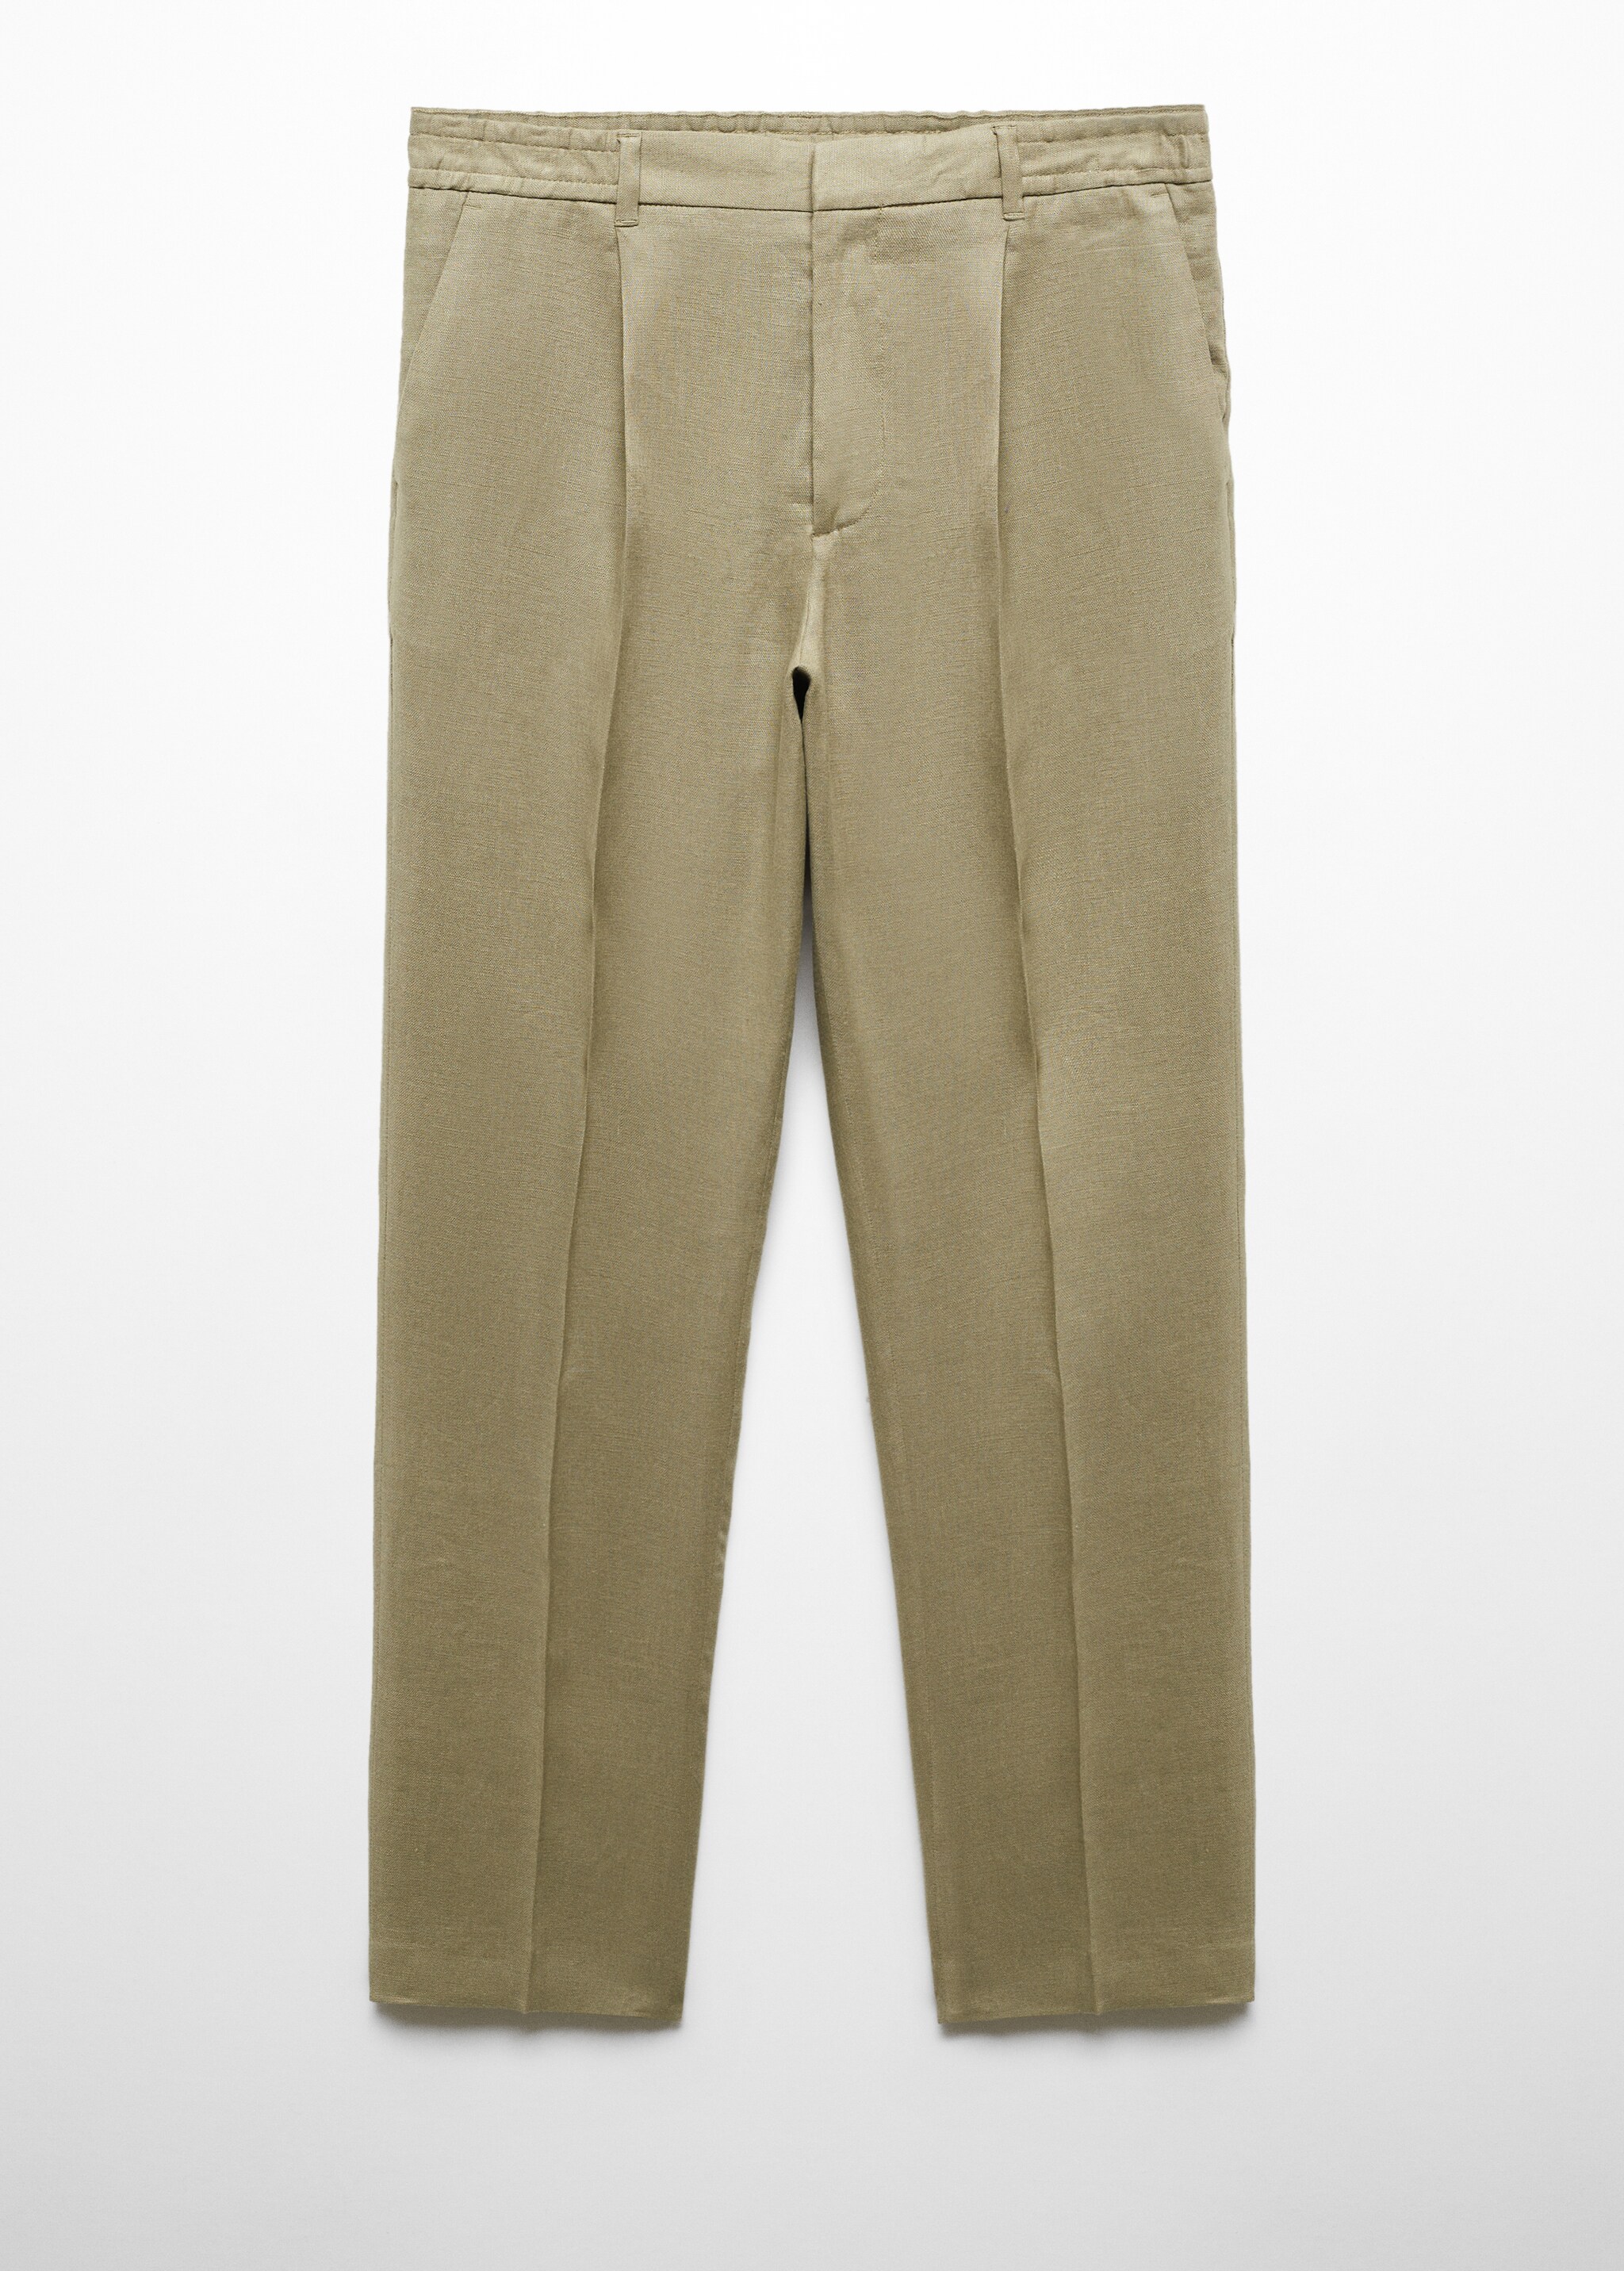 Pantalón 100% lino regular fit - Artículo sin modelo